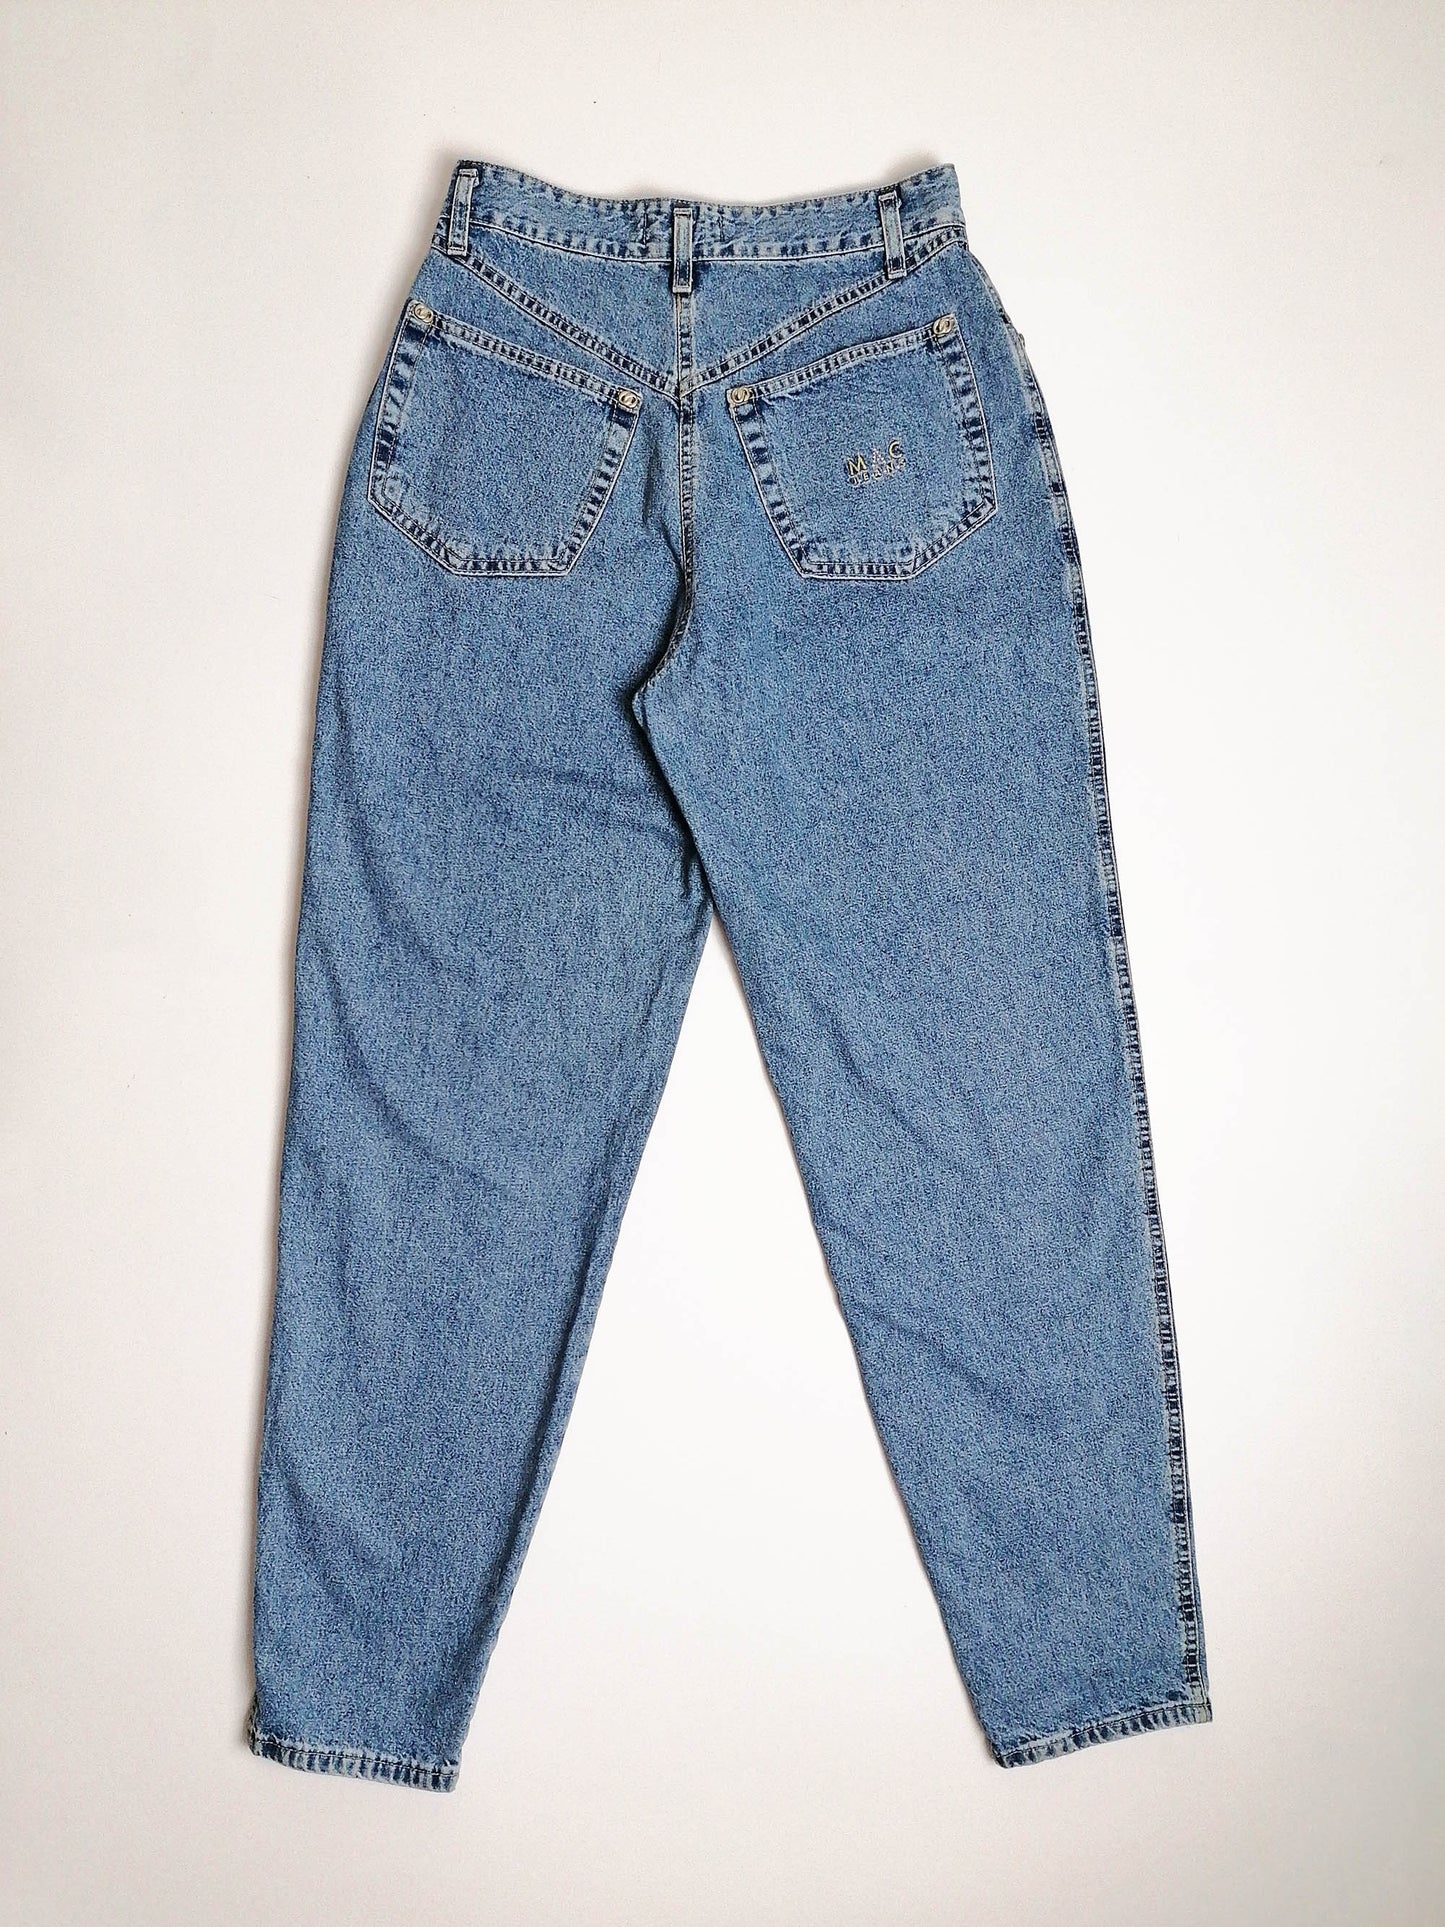 90's MAC High Waist Jeans Tapered Leg - size M-L ( 28" waist)